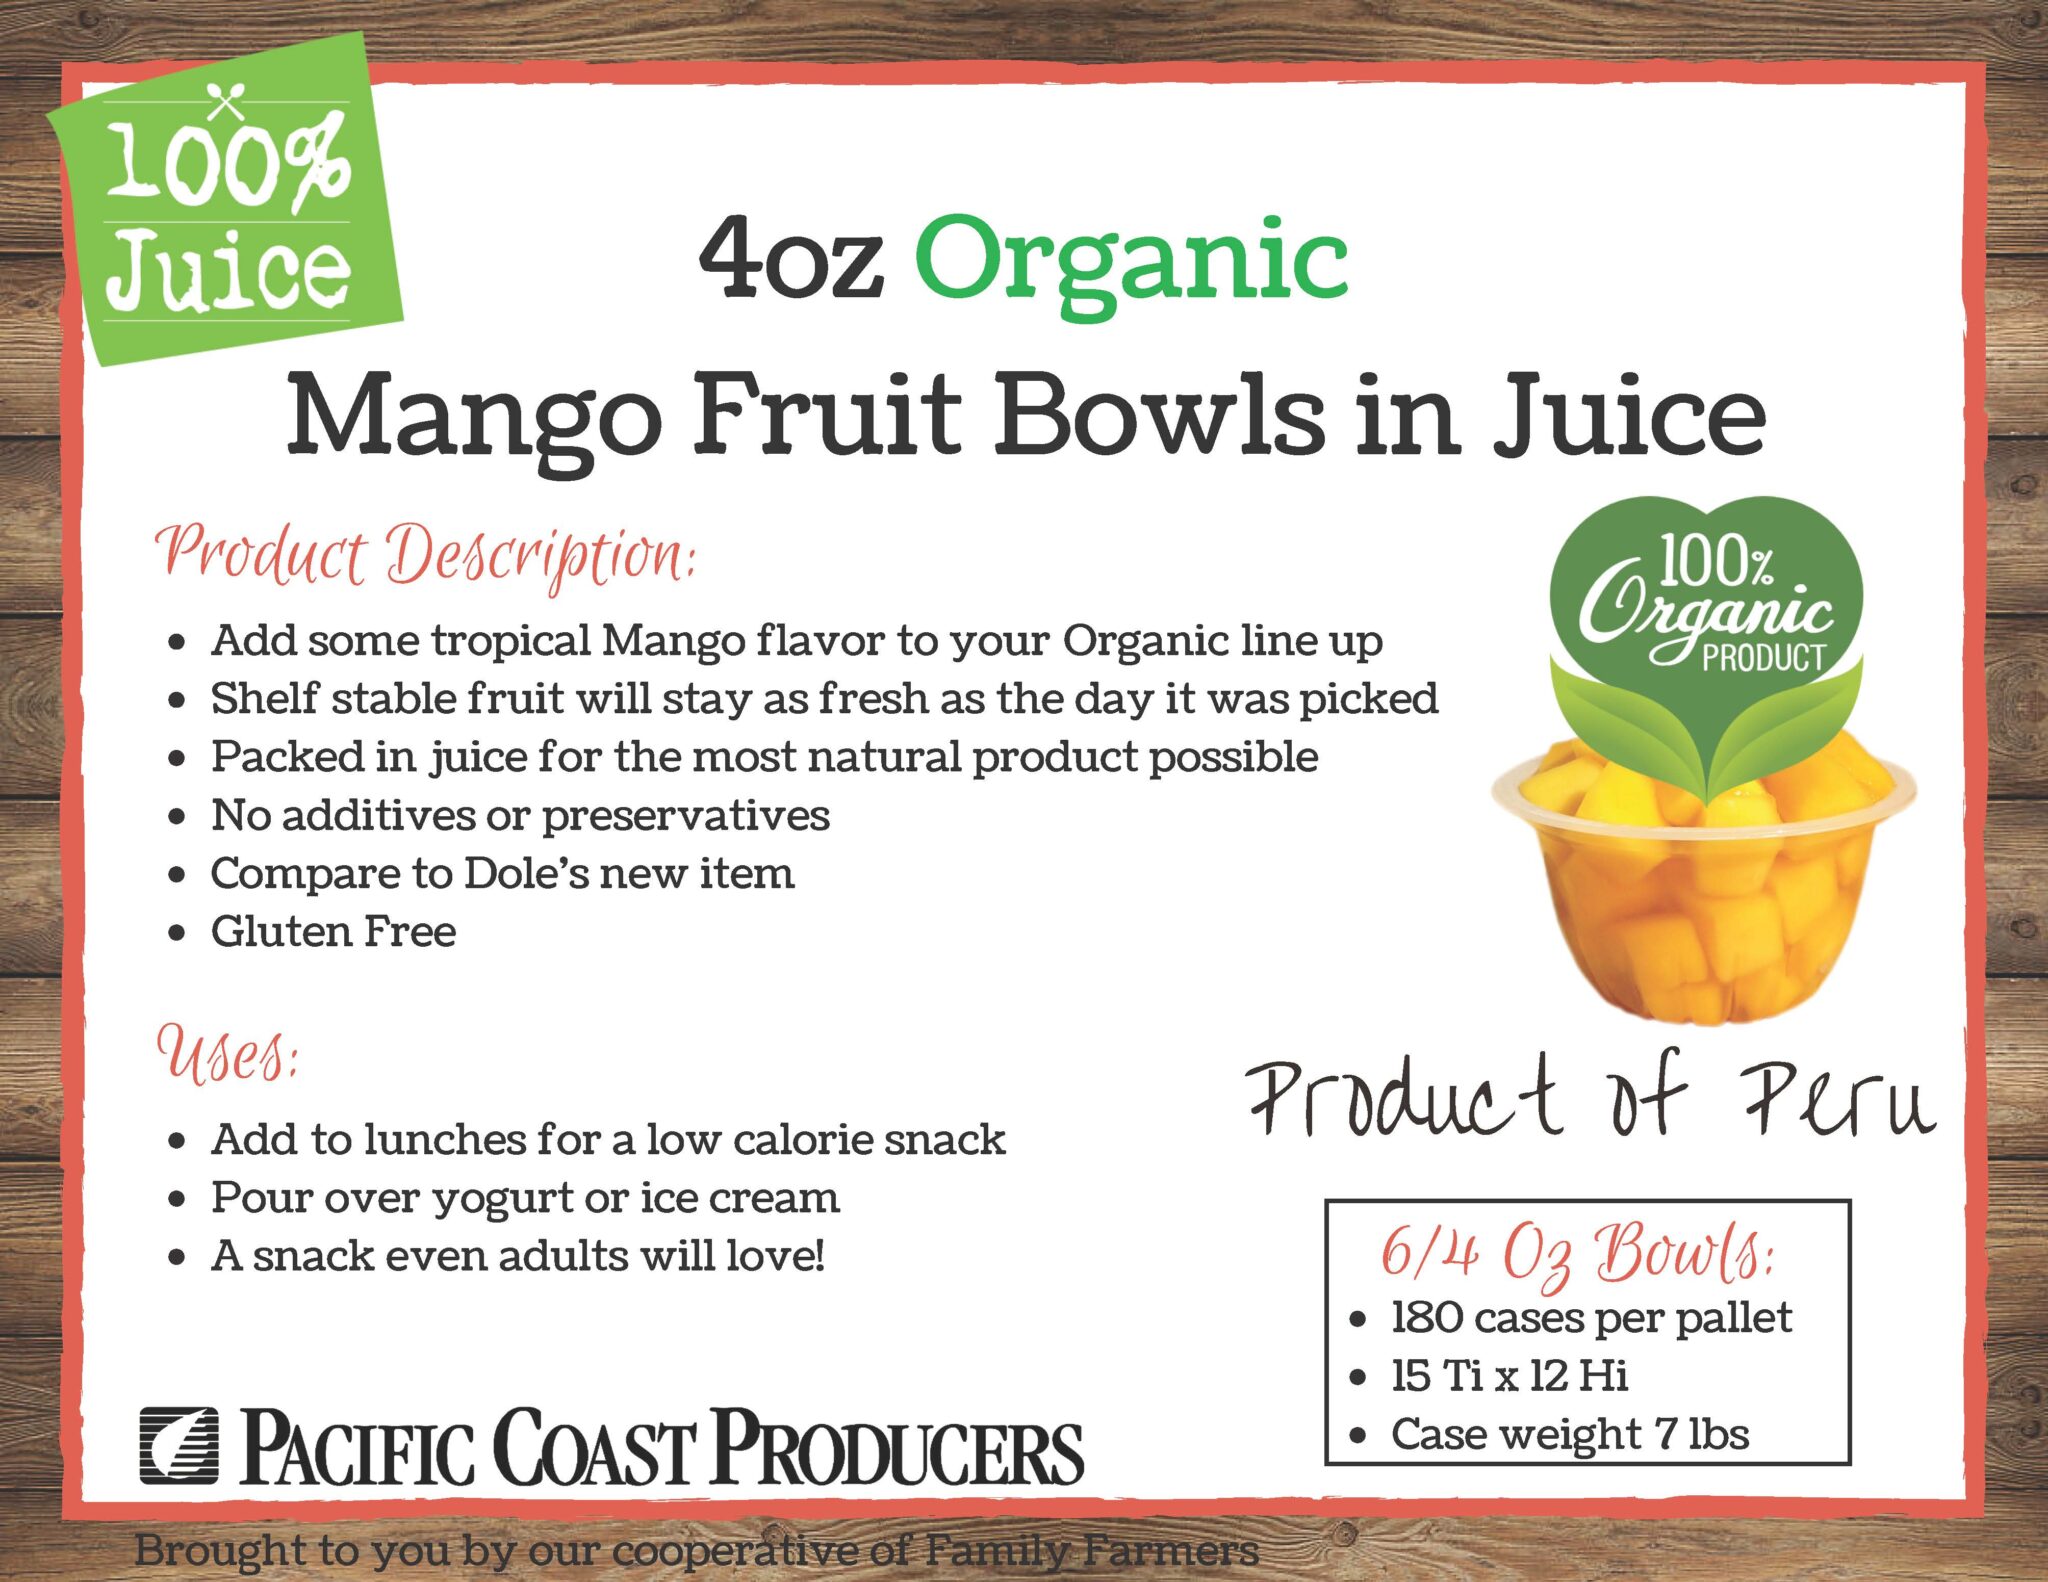 A retail flyer introducing organic mango fruit bowls in juice.